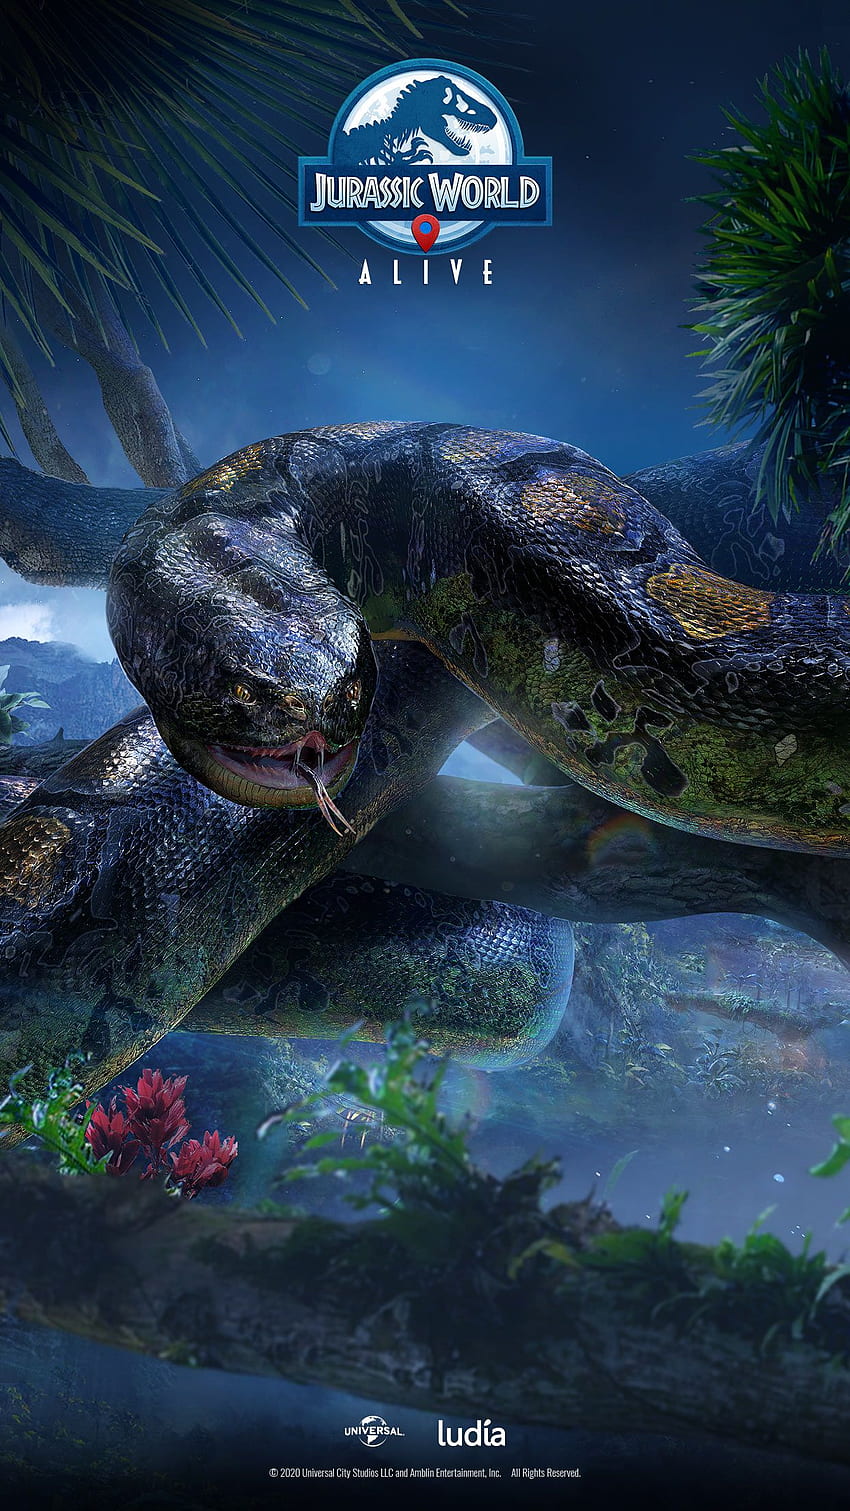 Five ways to watch Jurassic World Dominion | Cineworld cinemas